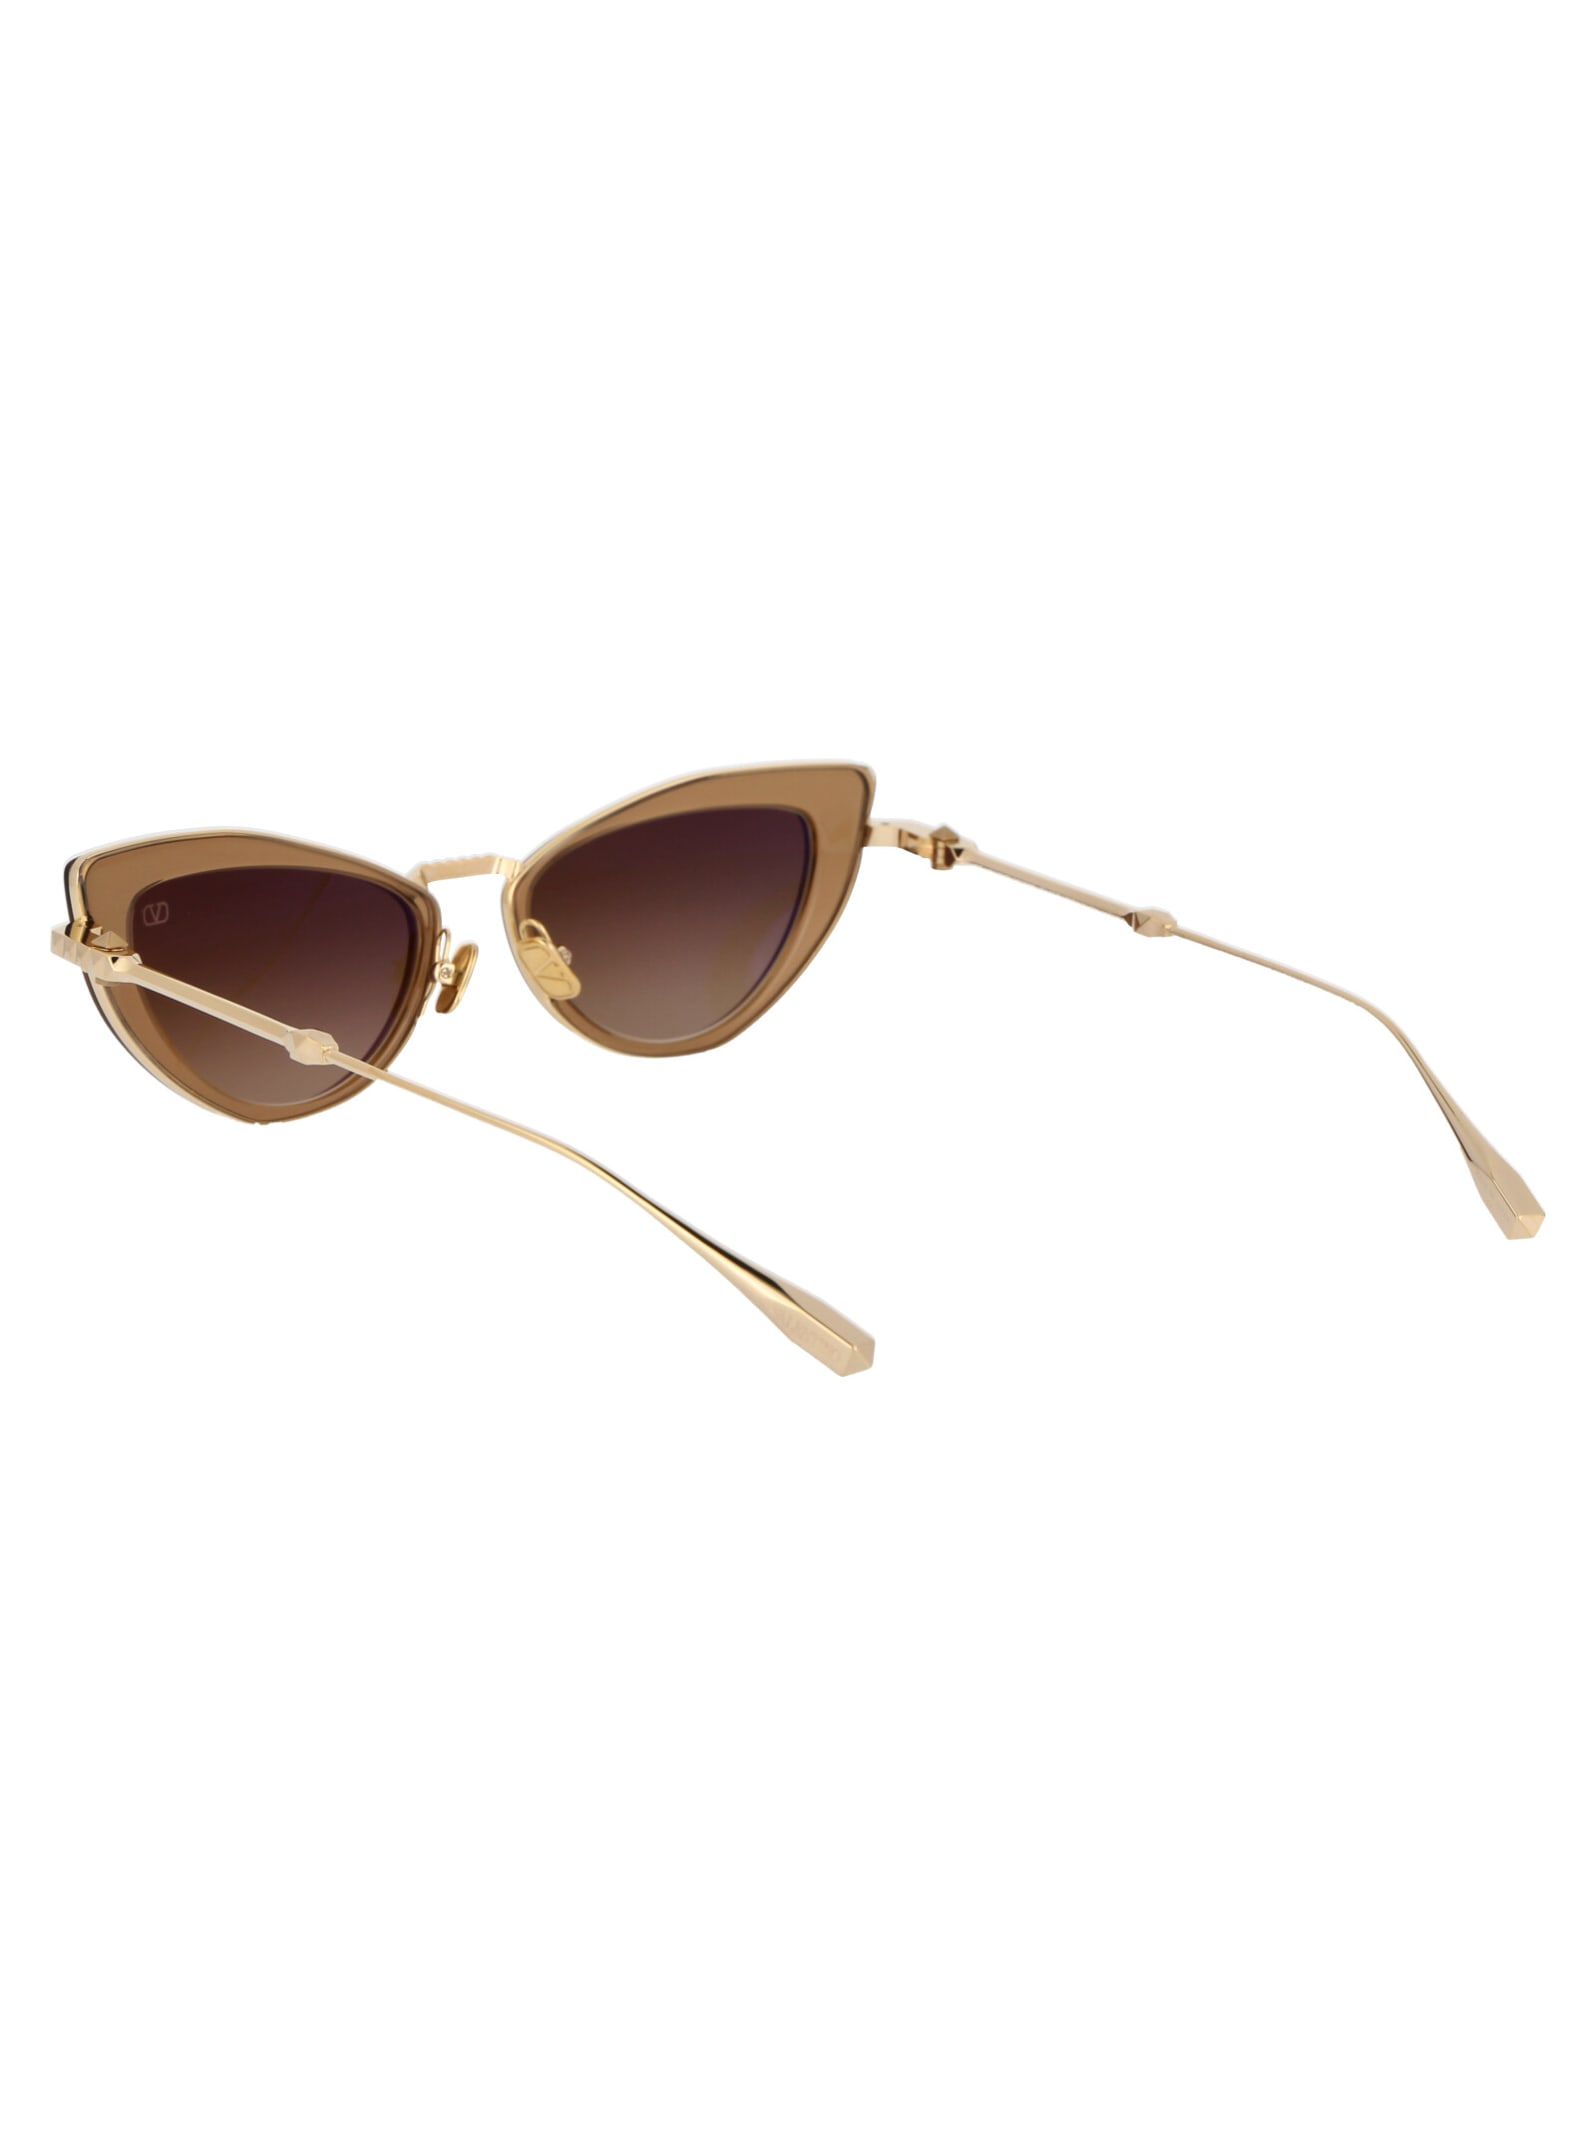 Shop Valentino Viii Sunglasses In Light Gold Crystal Medium Brown W/ Dark Brown To Light Brown